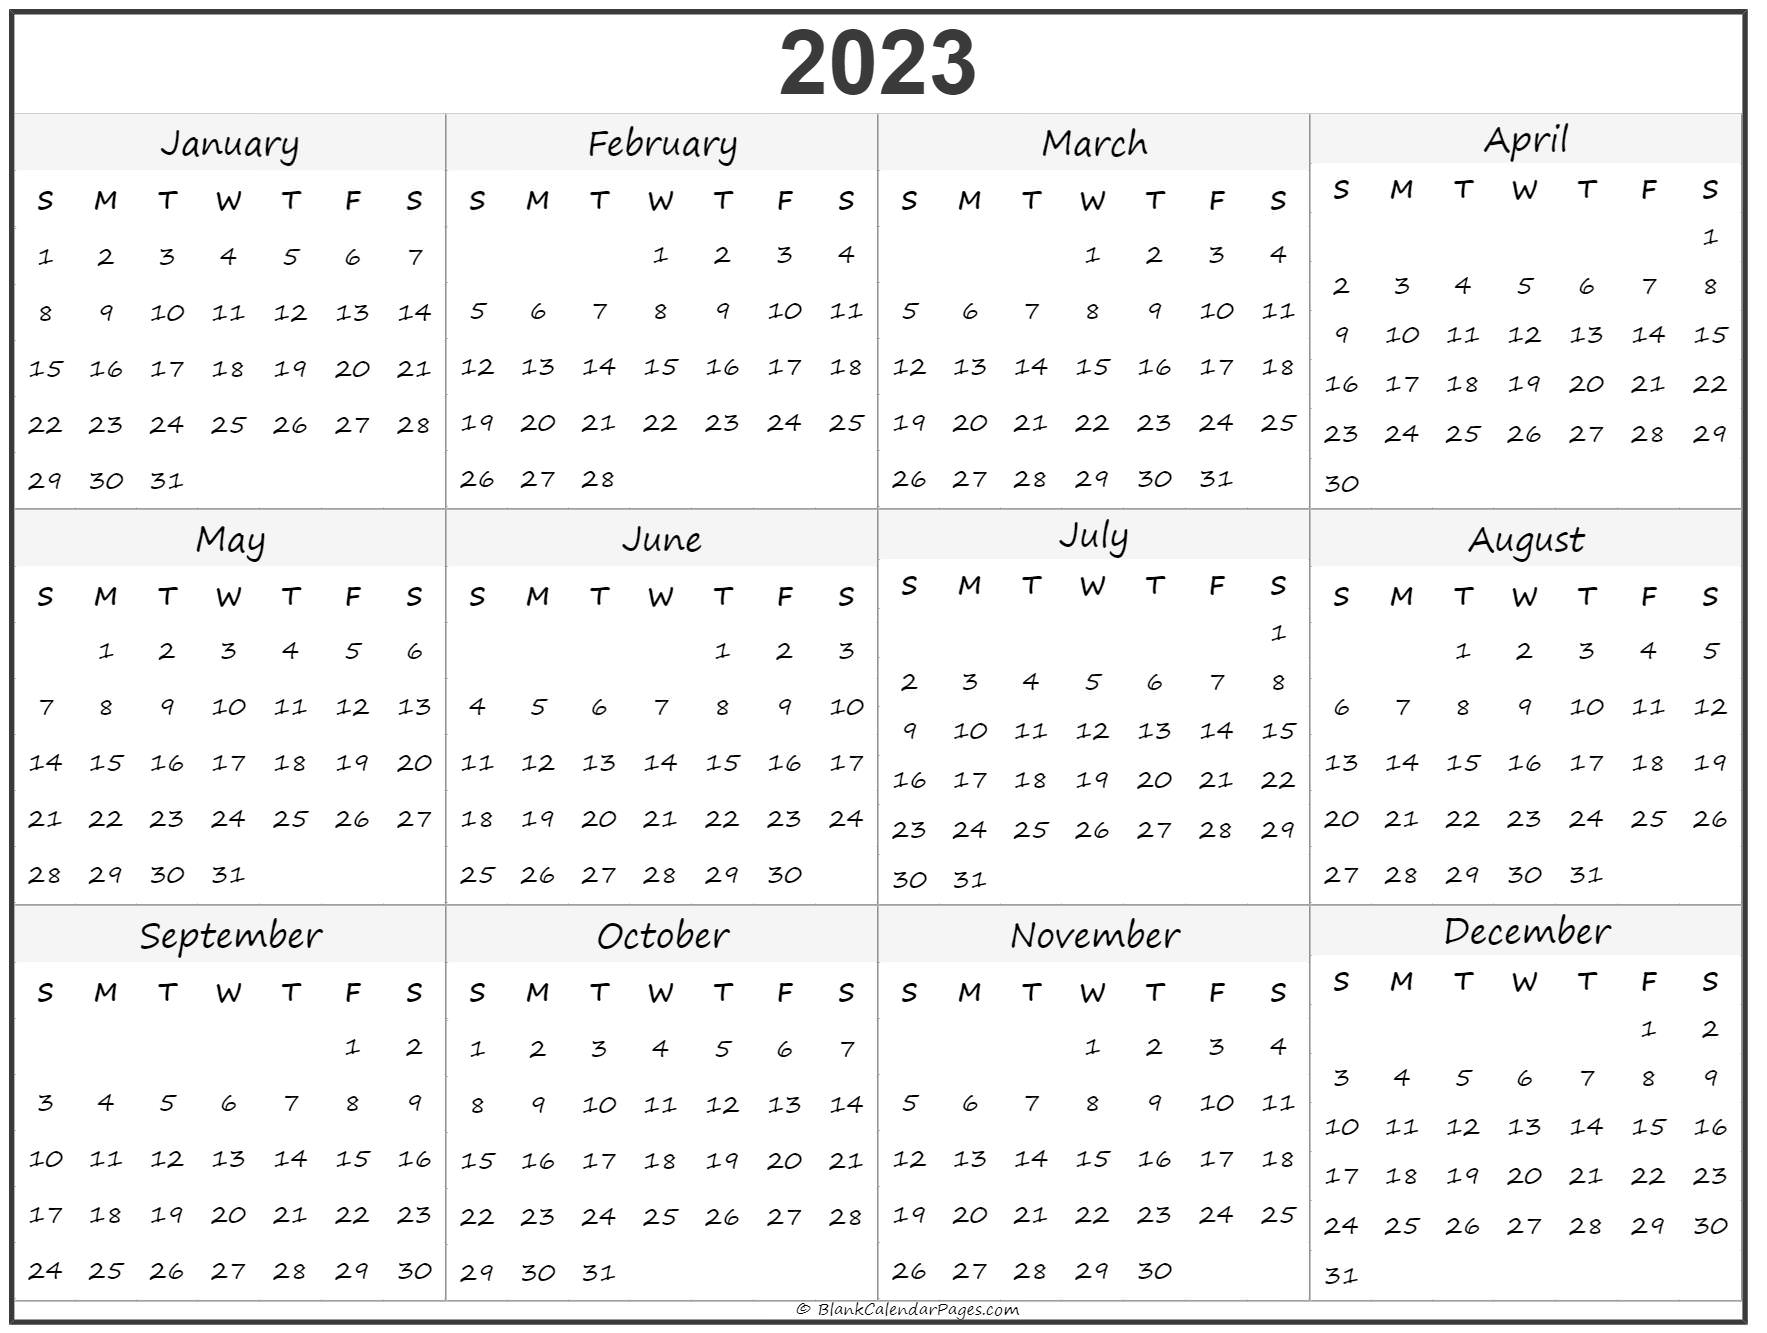 2023 Calendar Pdf Word Excel 2023 Calendar Templates And Images Free Printable 2023 Calendar